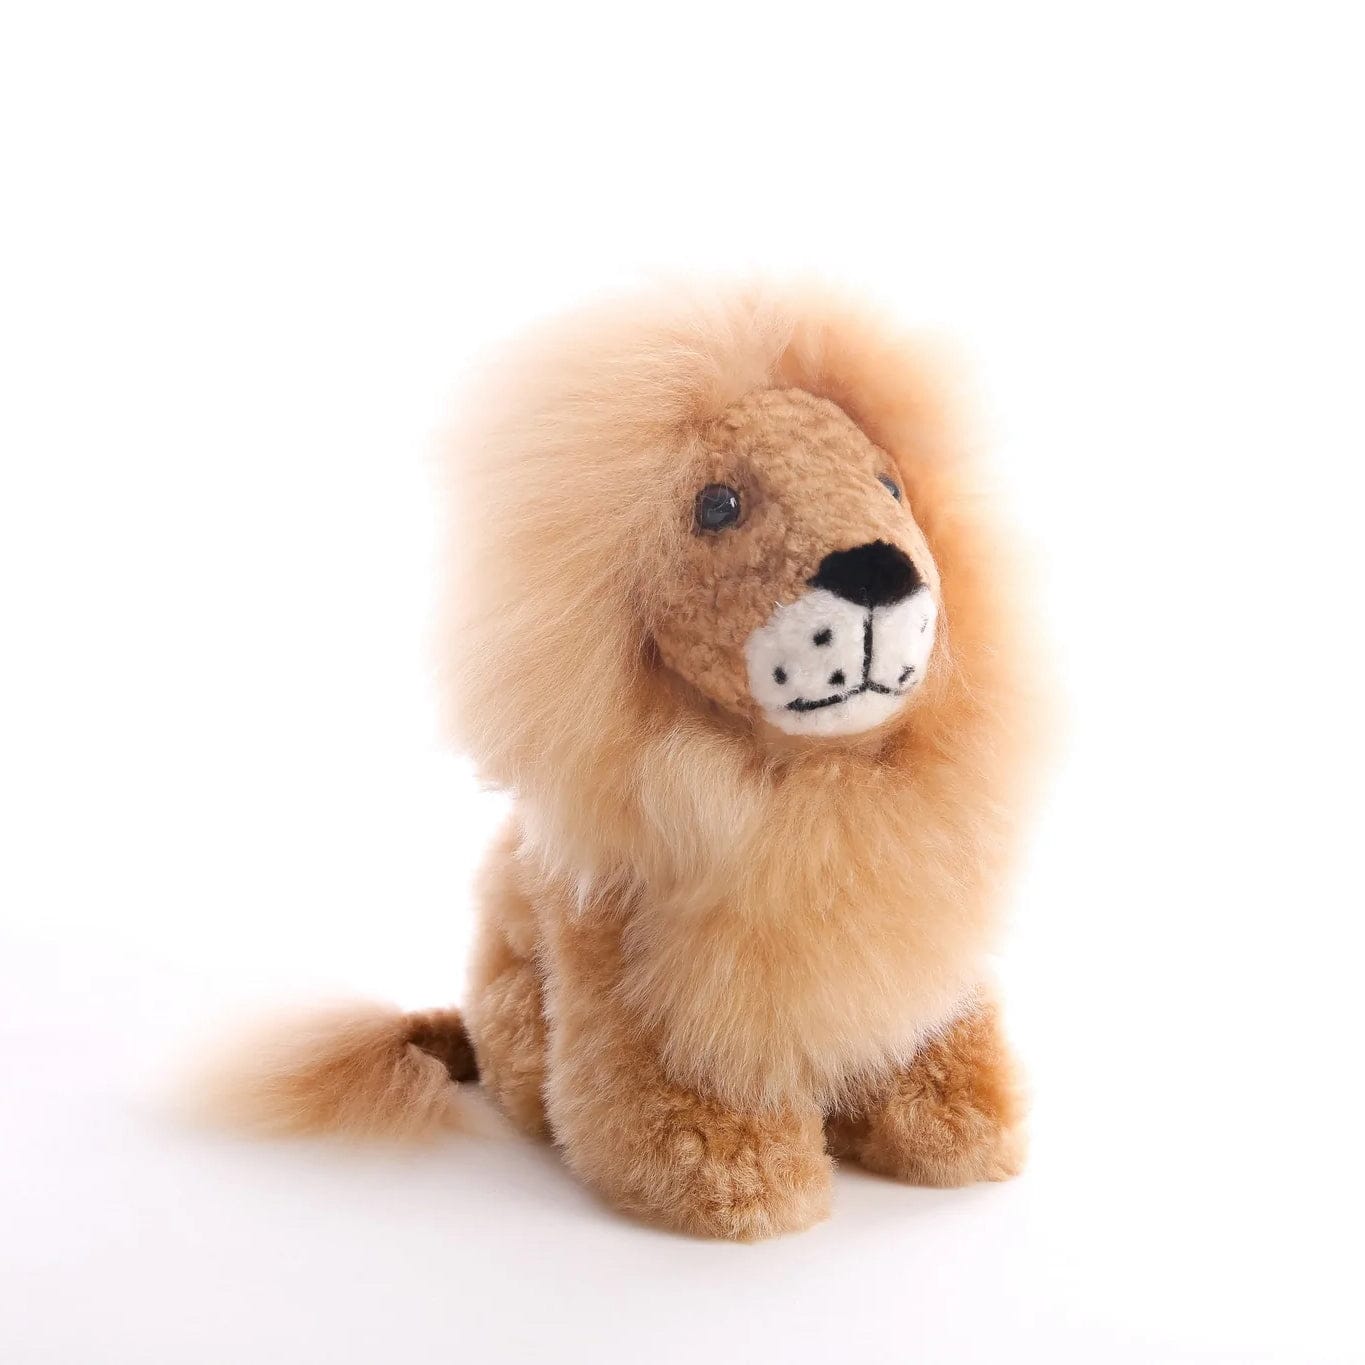 Auskin Pure Alpaca Toy Lion [Two Sizes]